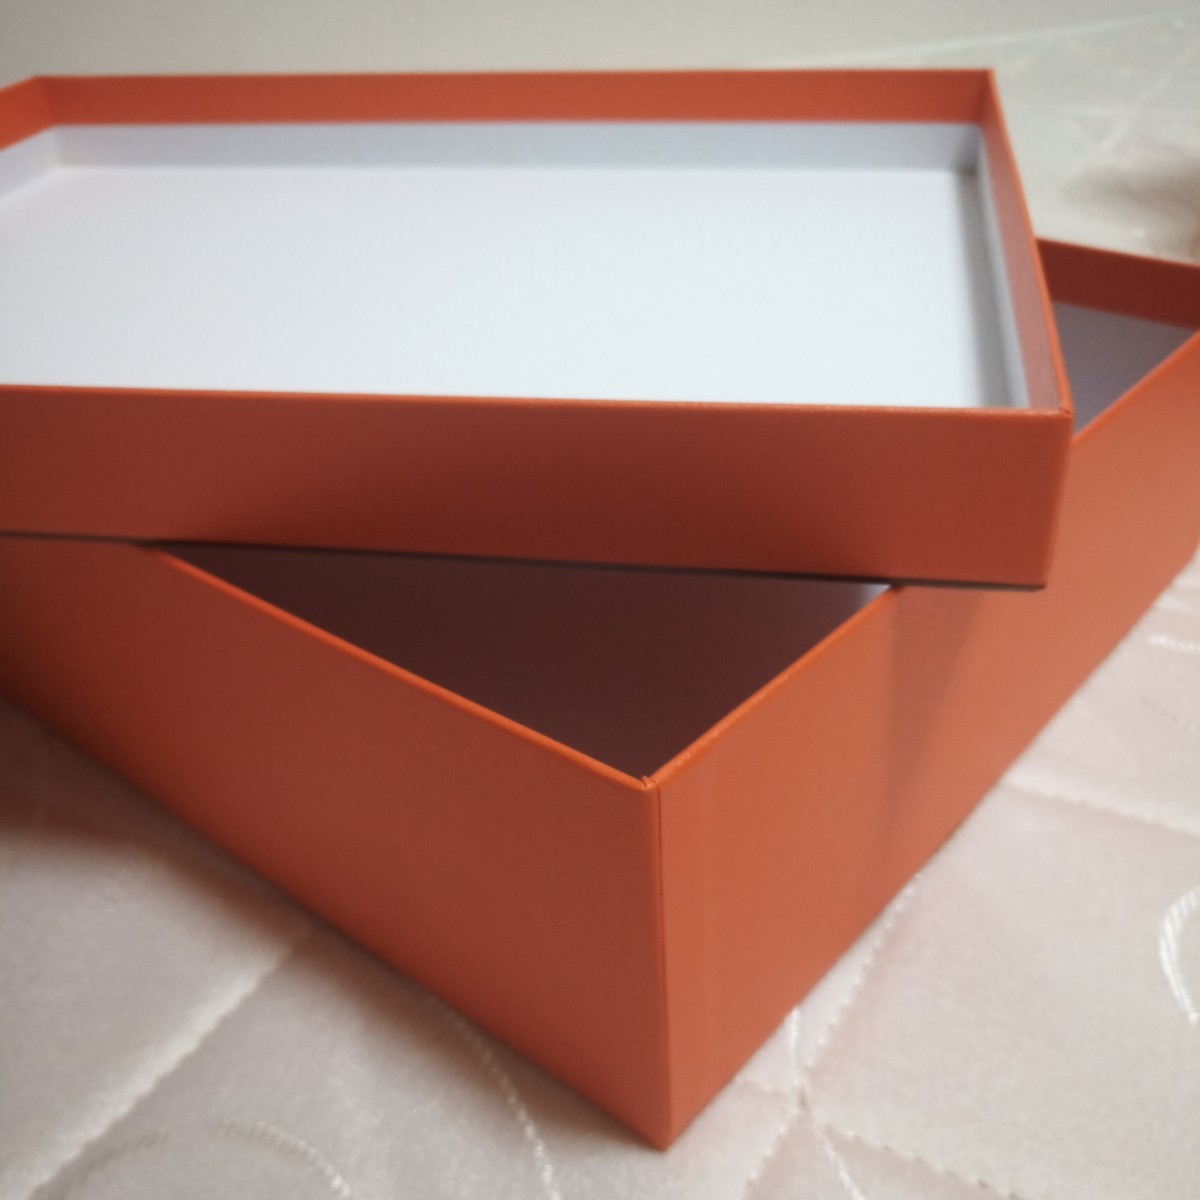 Hermes エルメス 空箱 33 × 26 × 8 空き箱 箱 BOX ボックス オレンジ オレンジボックス 化粧箱 006 _画像7